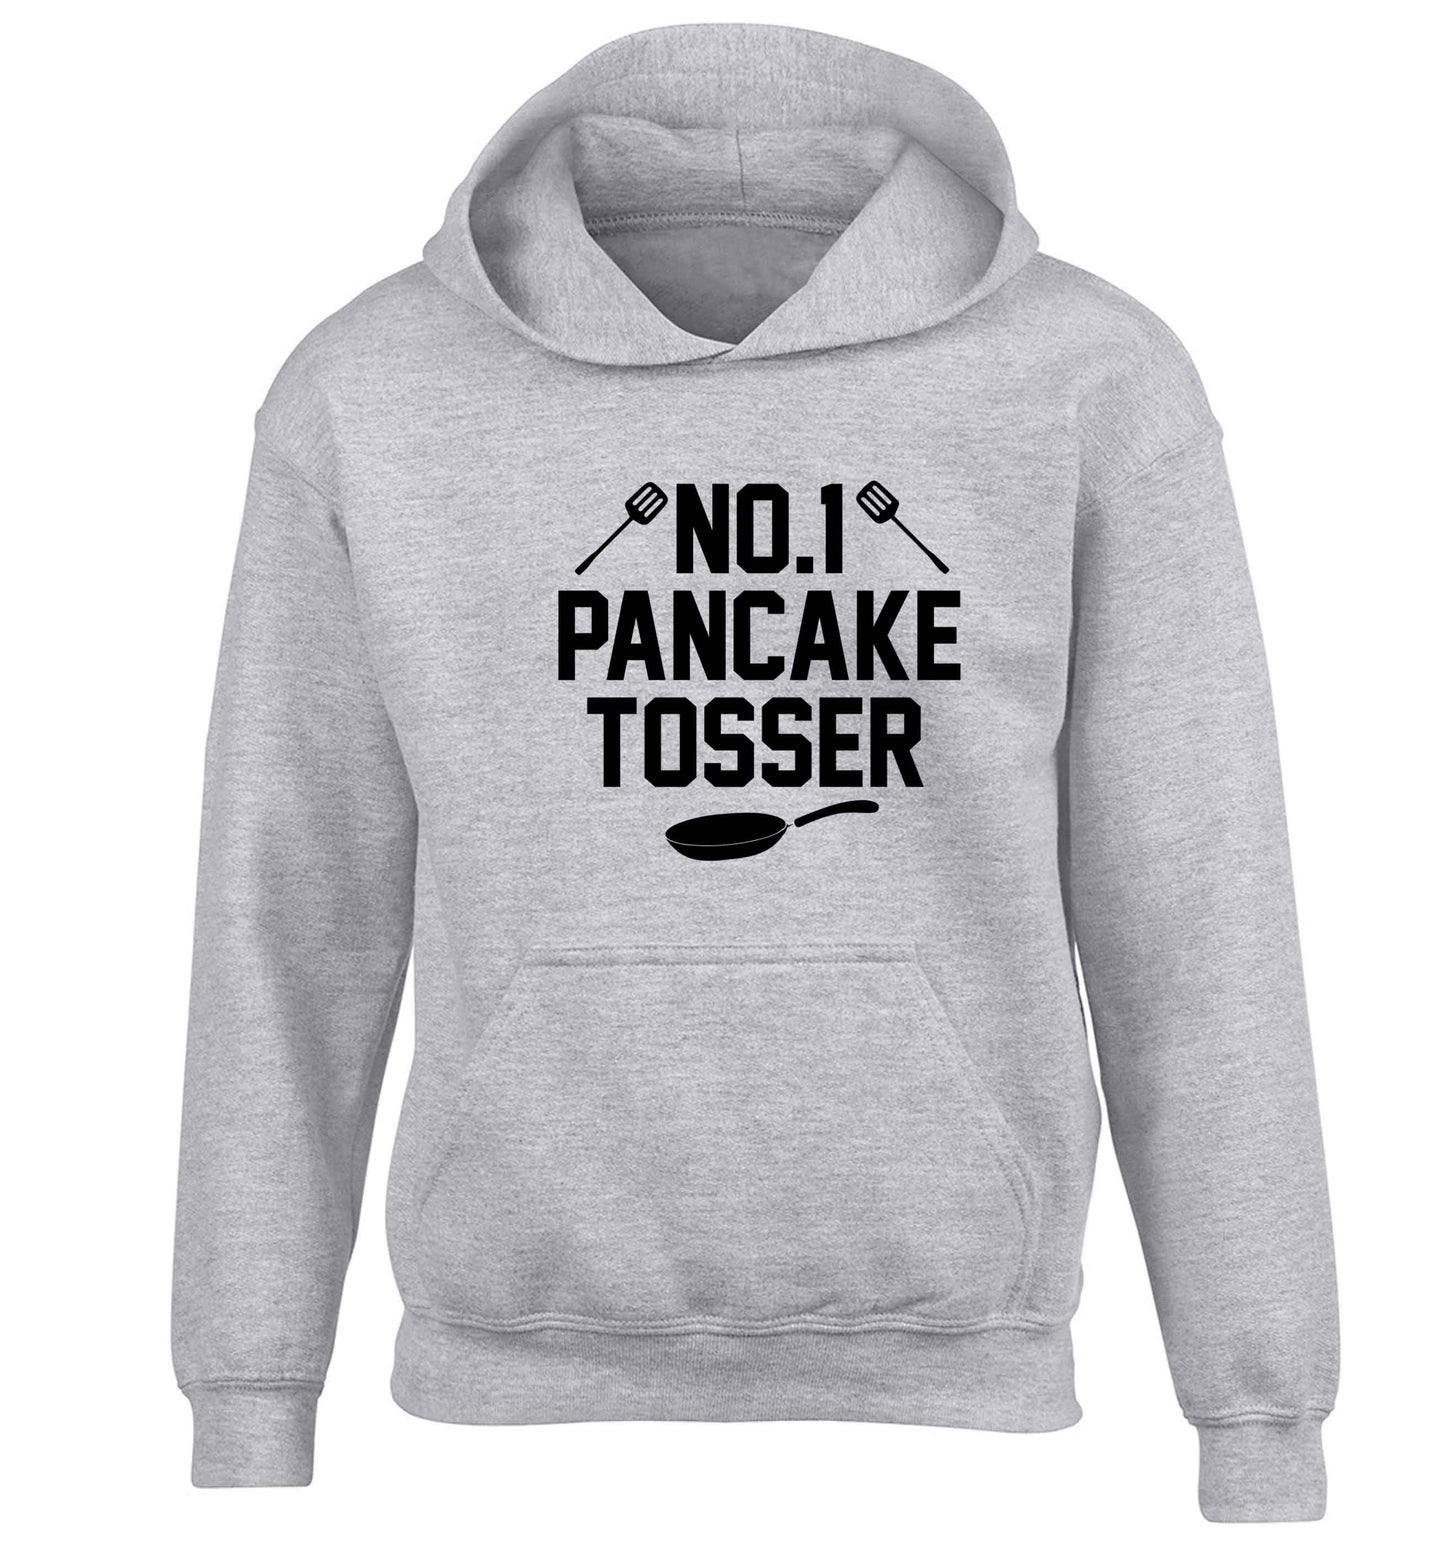 No.1 Pancake tosser children's grey hoodie 12-13 Years